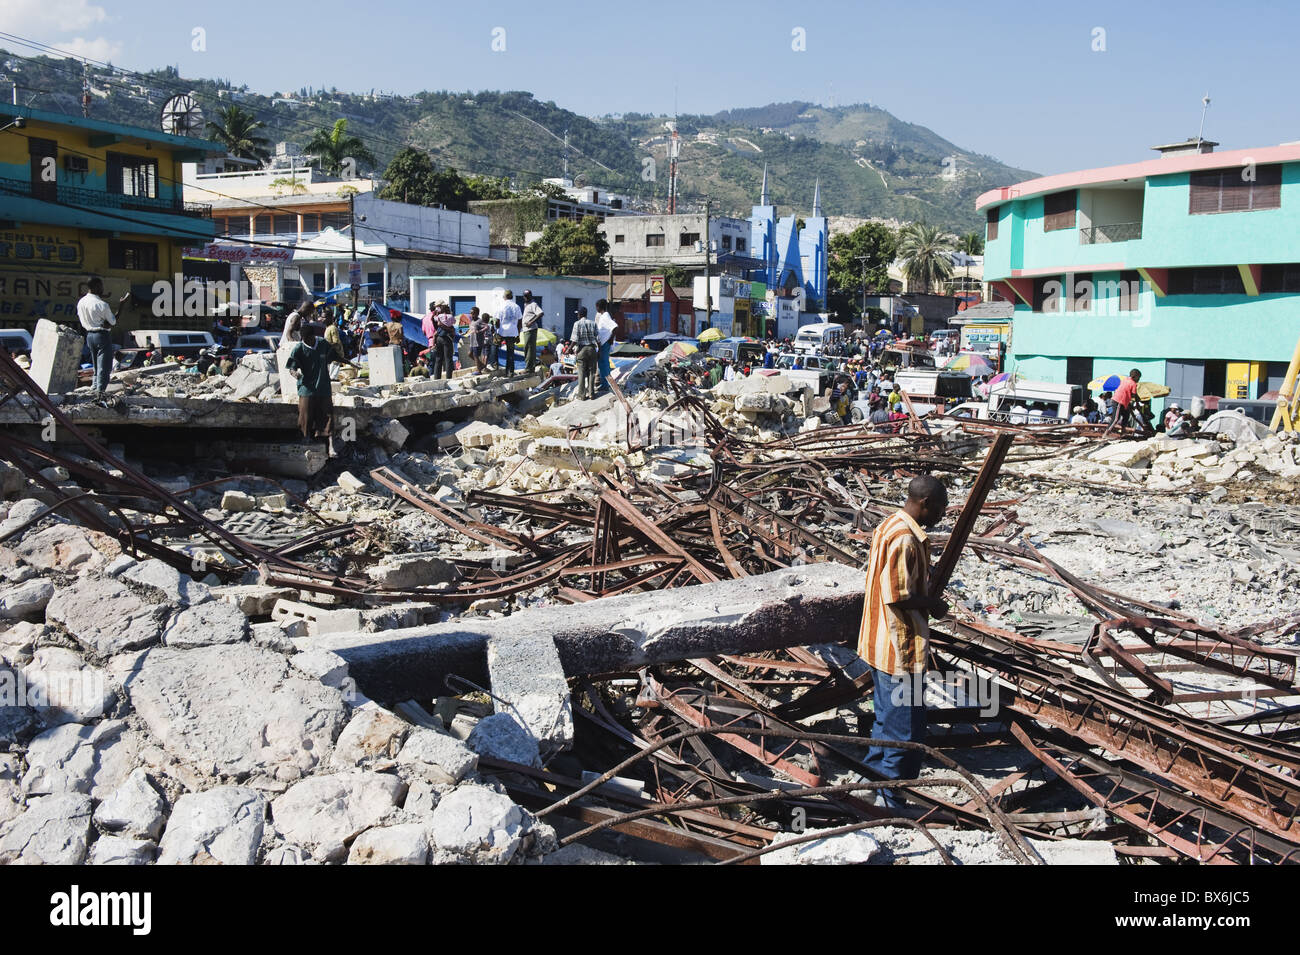 Bergung und Rekonstruktion arbeiten, Januar 2010 Erdbeben verursachten Schäden, Port au Prince, Haiti, Karibik, Karibik, Mittelamerika Stockfoto